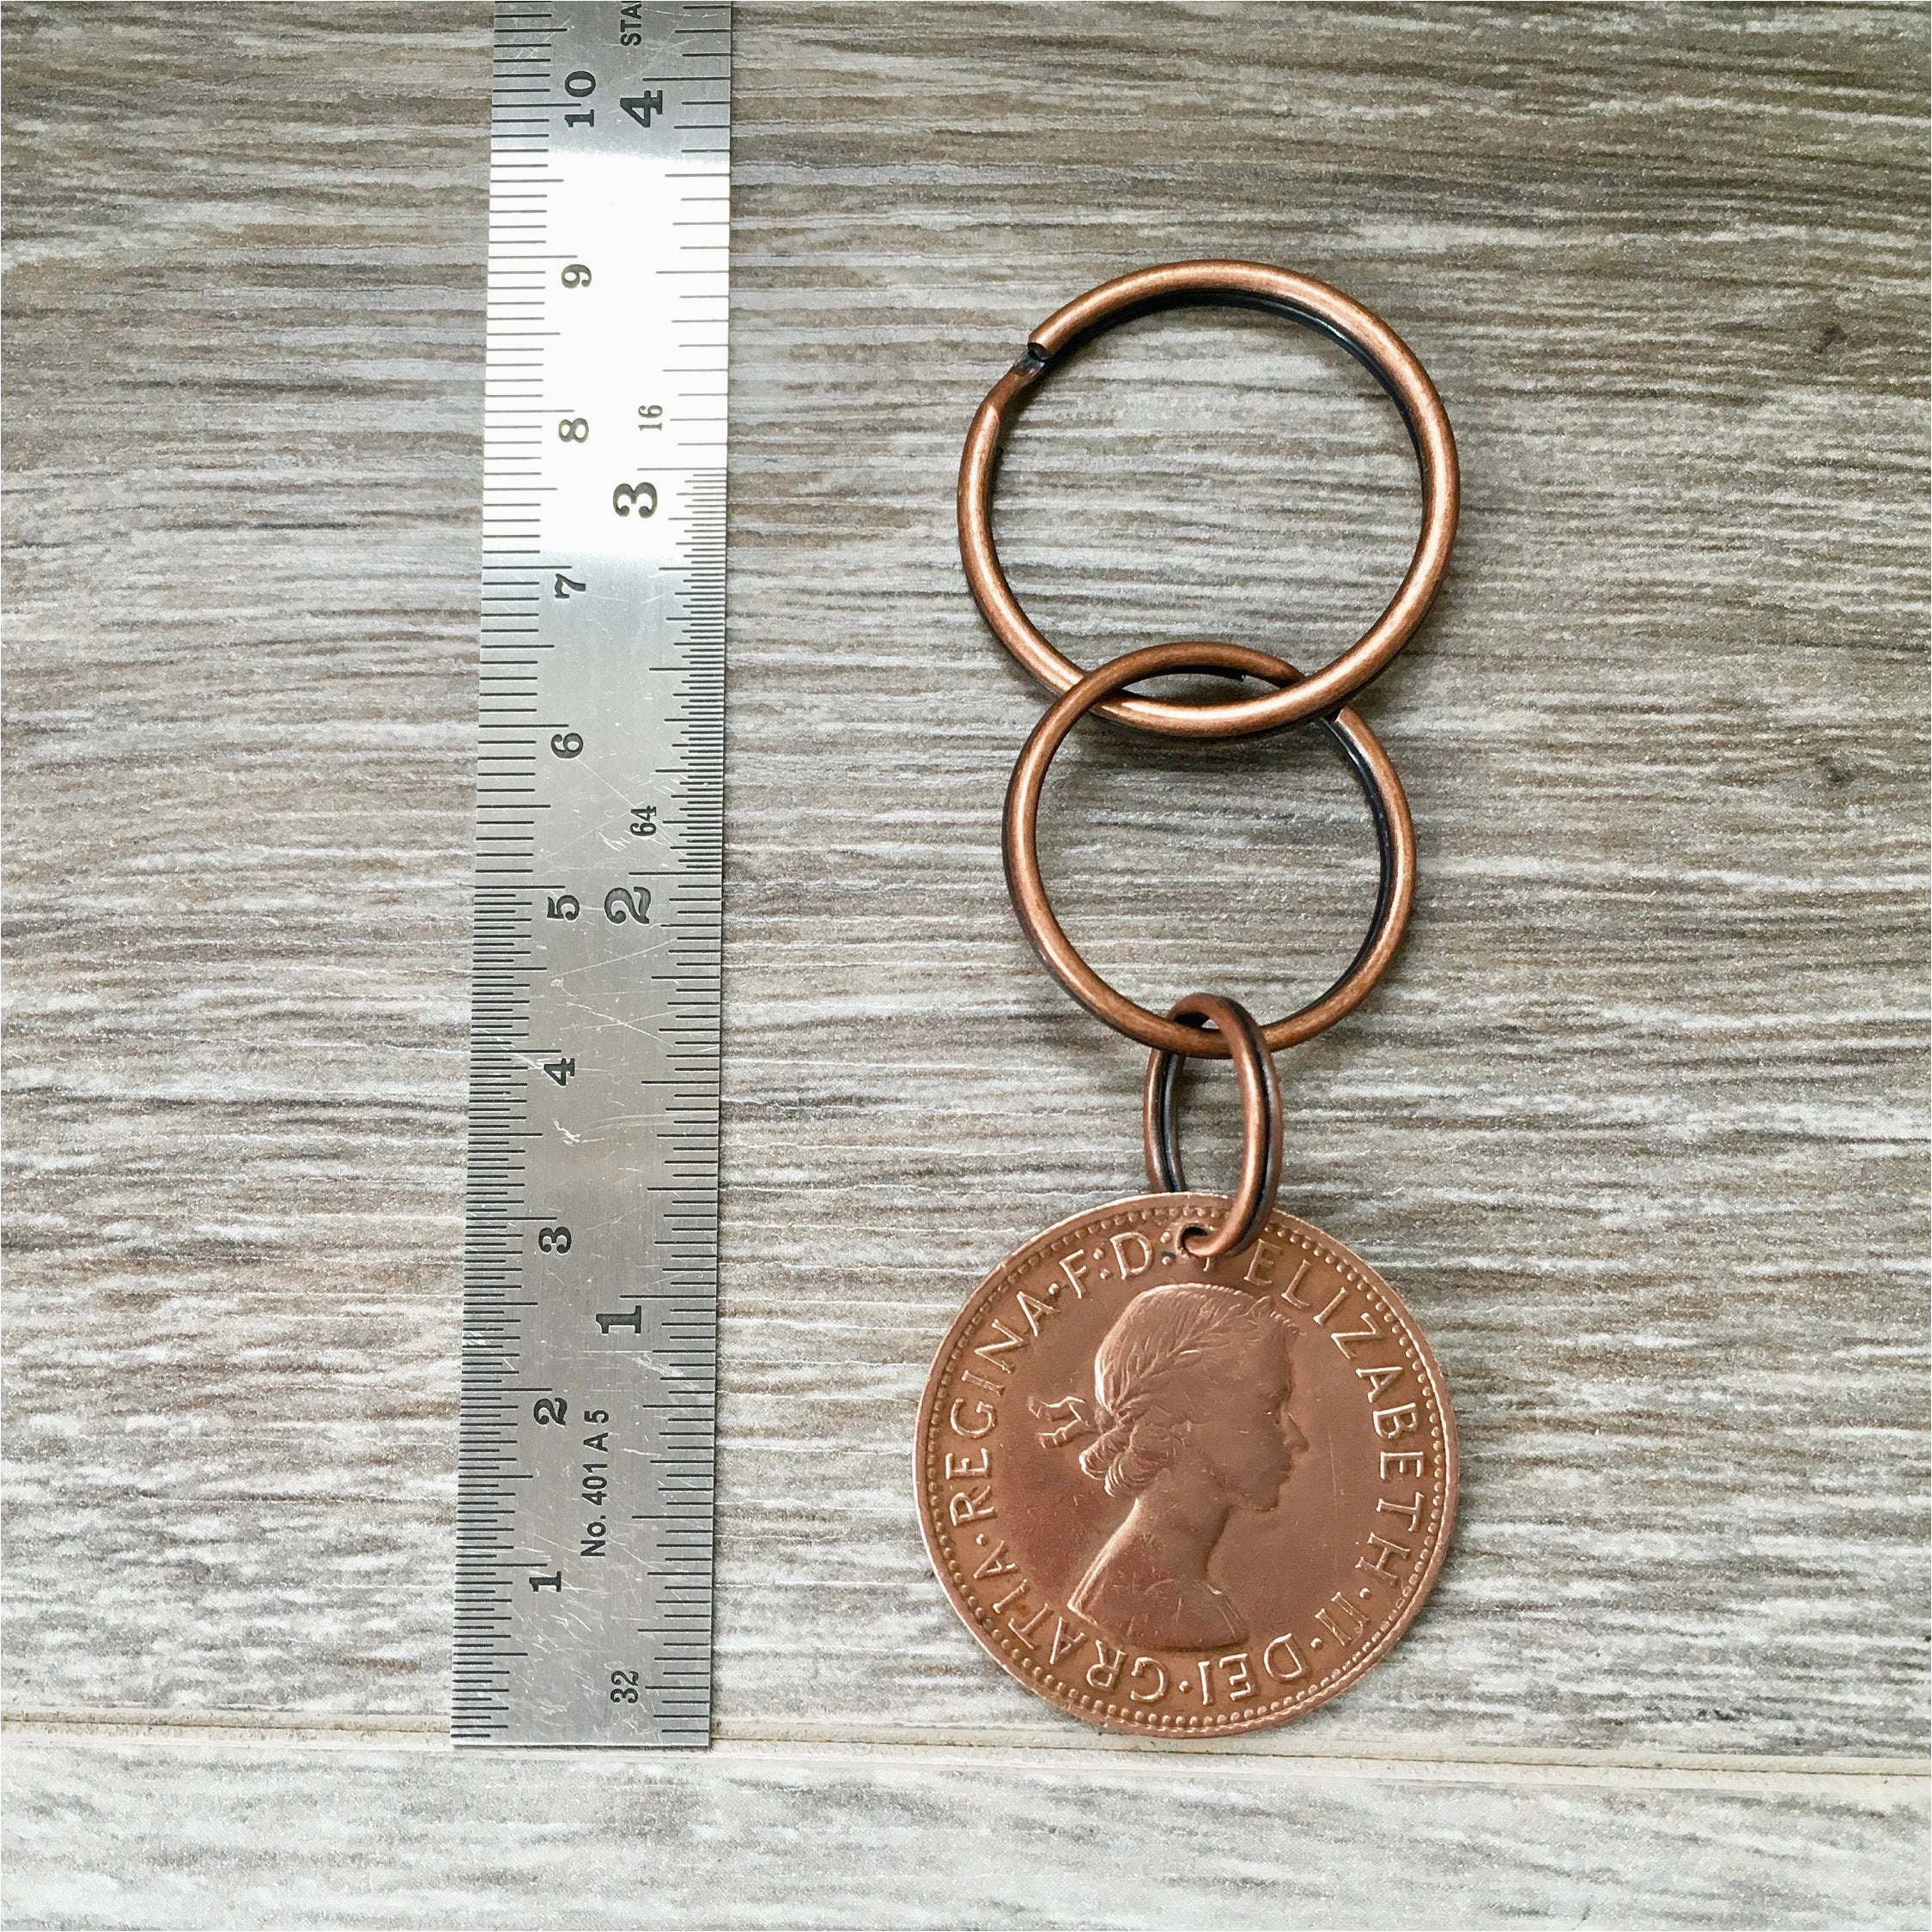 1958 australian kangaroo coin key chain